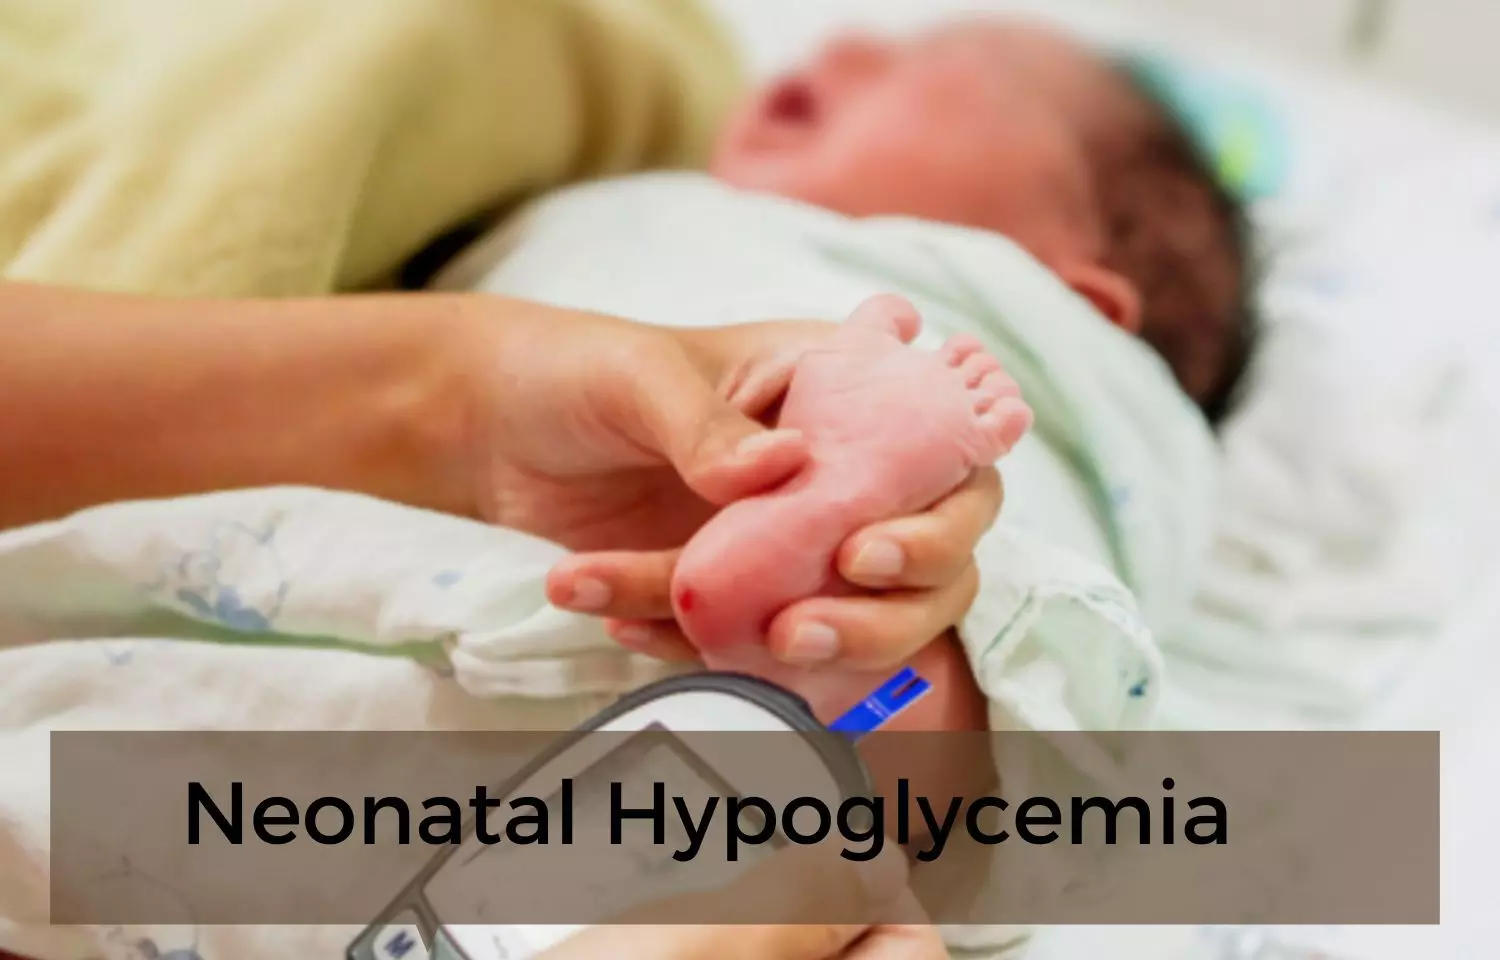 Neonatal Hypoglycemia: Indian Academy of Pediatrics Guidelines